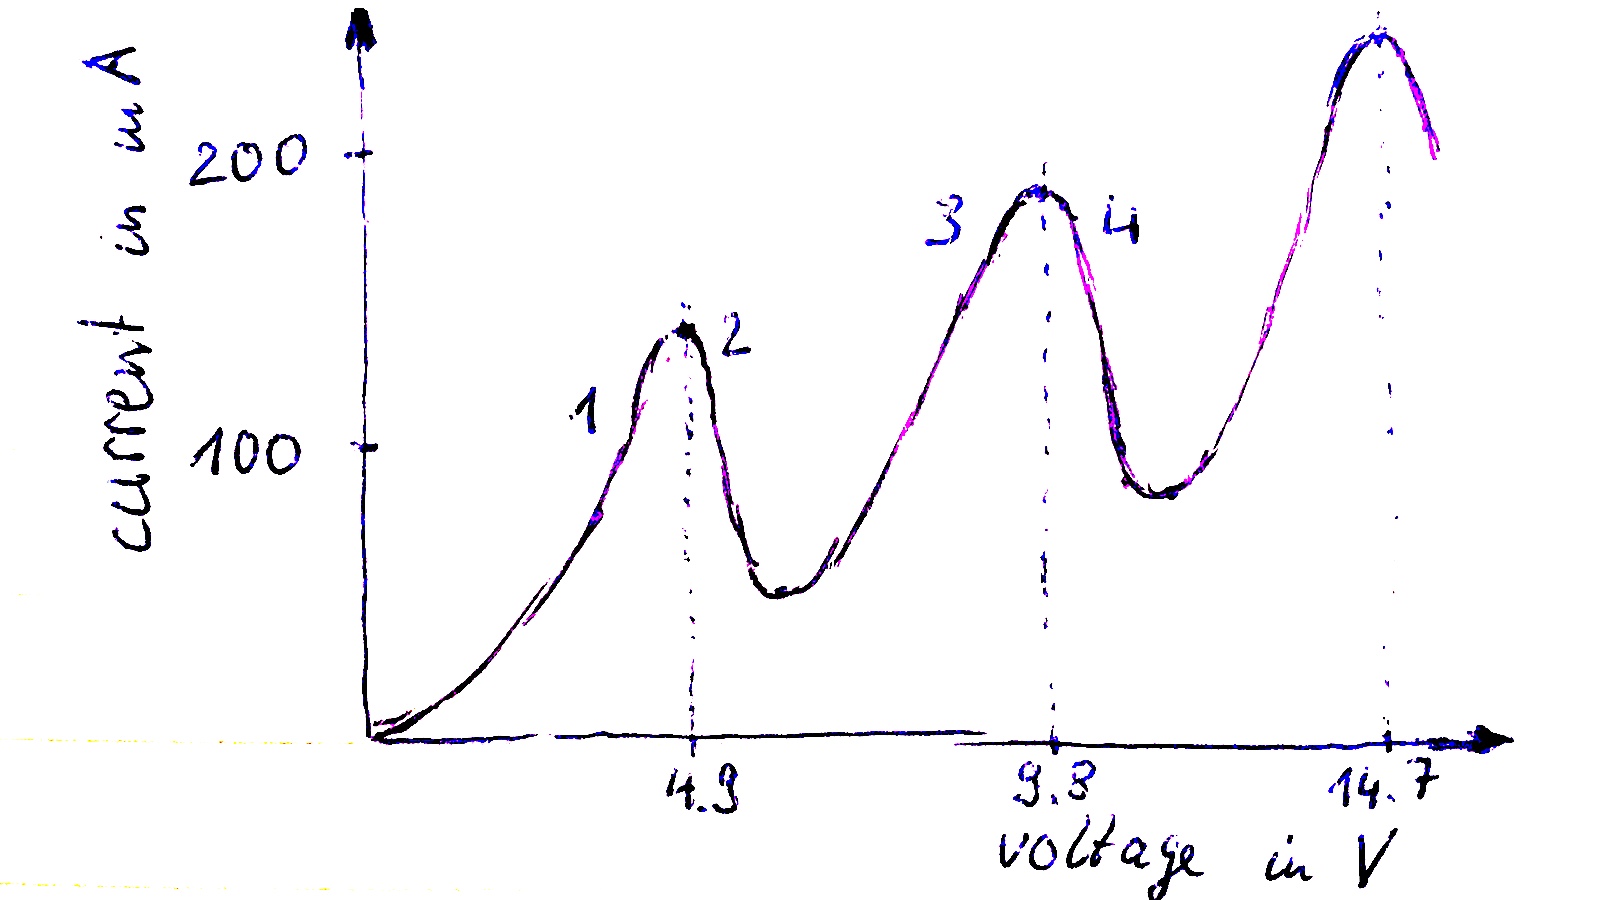 voltage versus current of Franck Hertz experiment for mercury